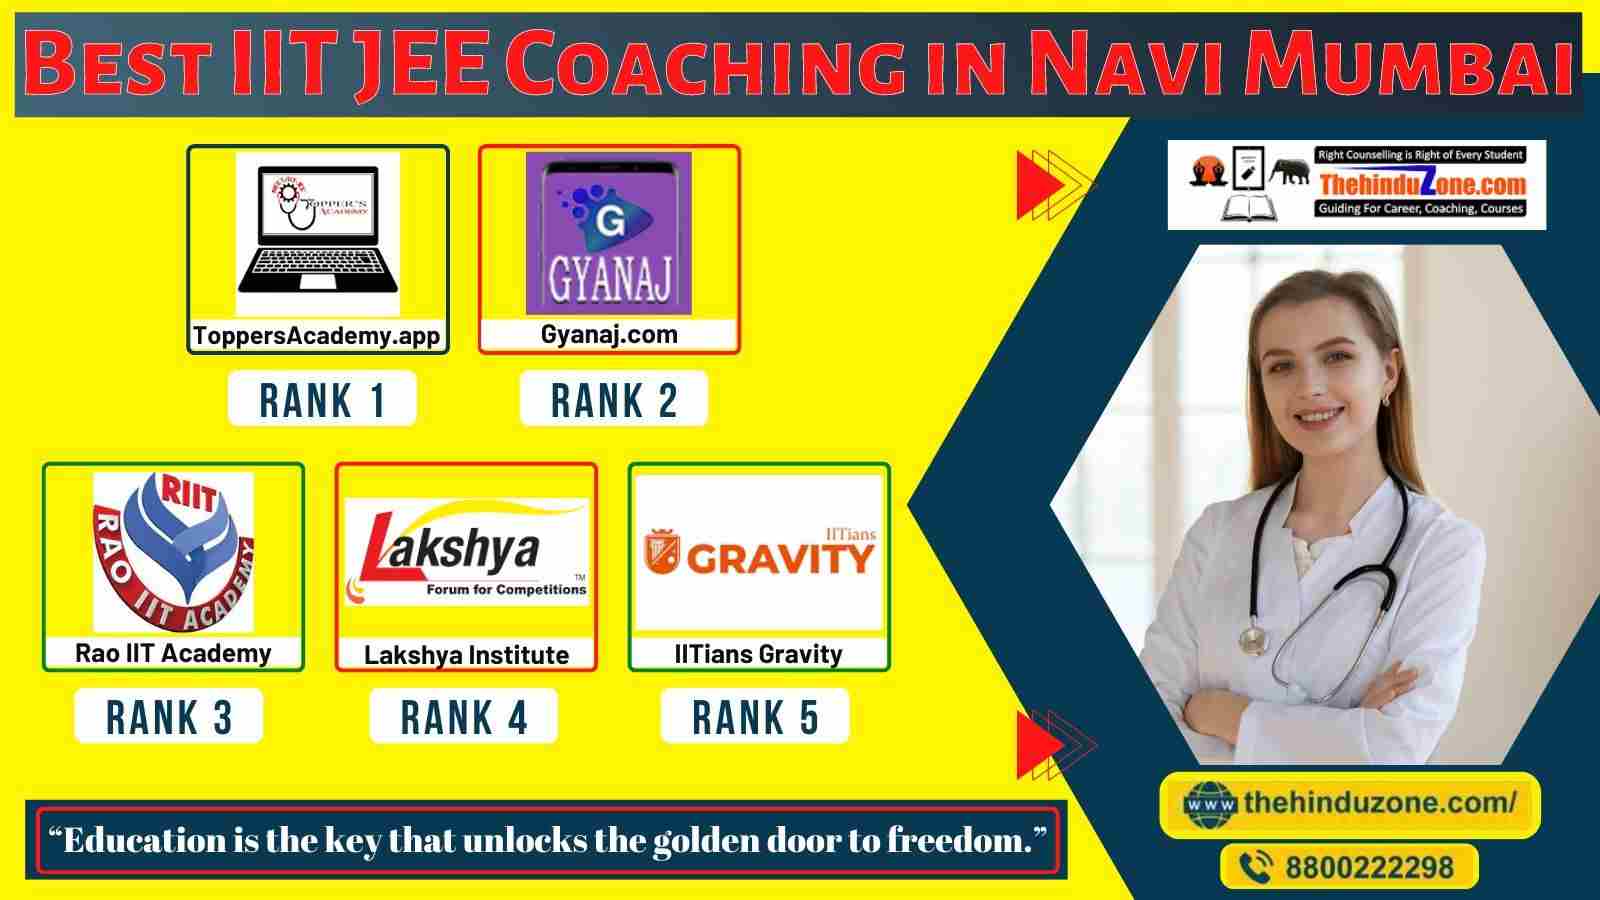 Best IIT JEE Coaching in Navi Mumbai